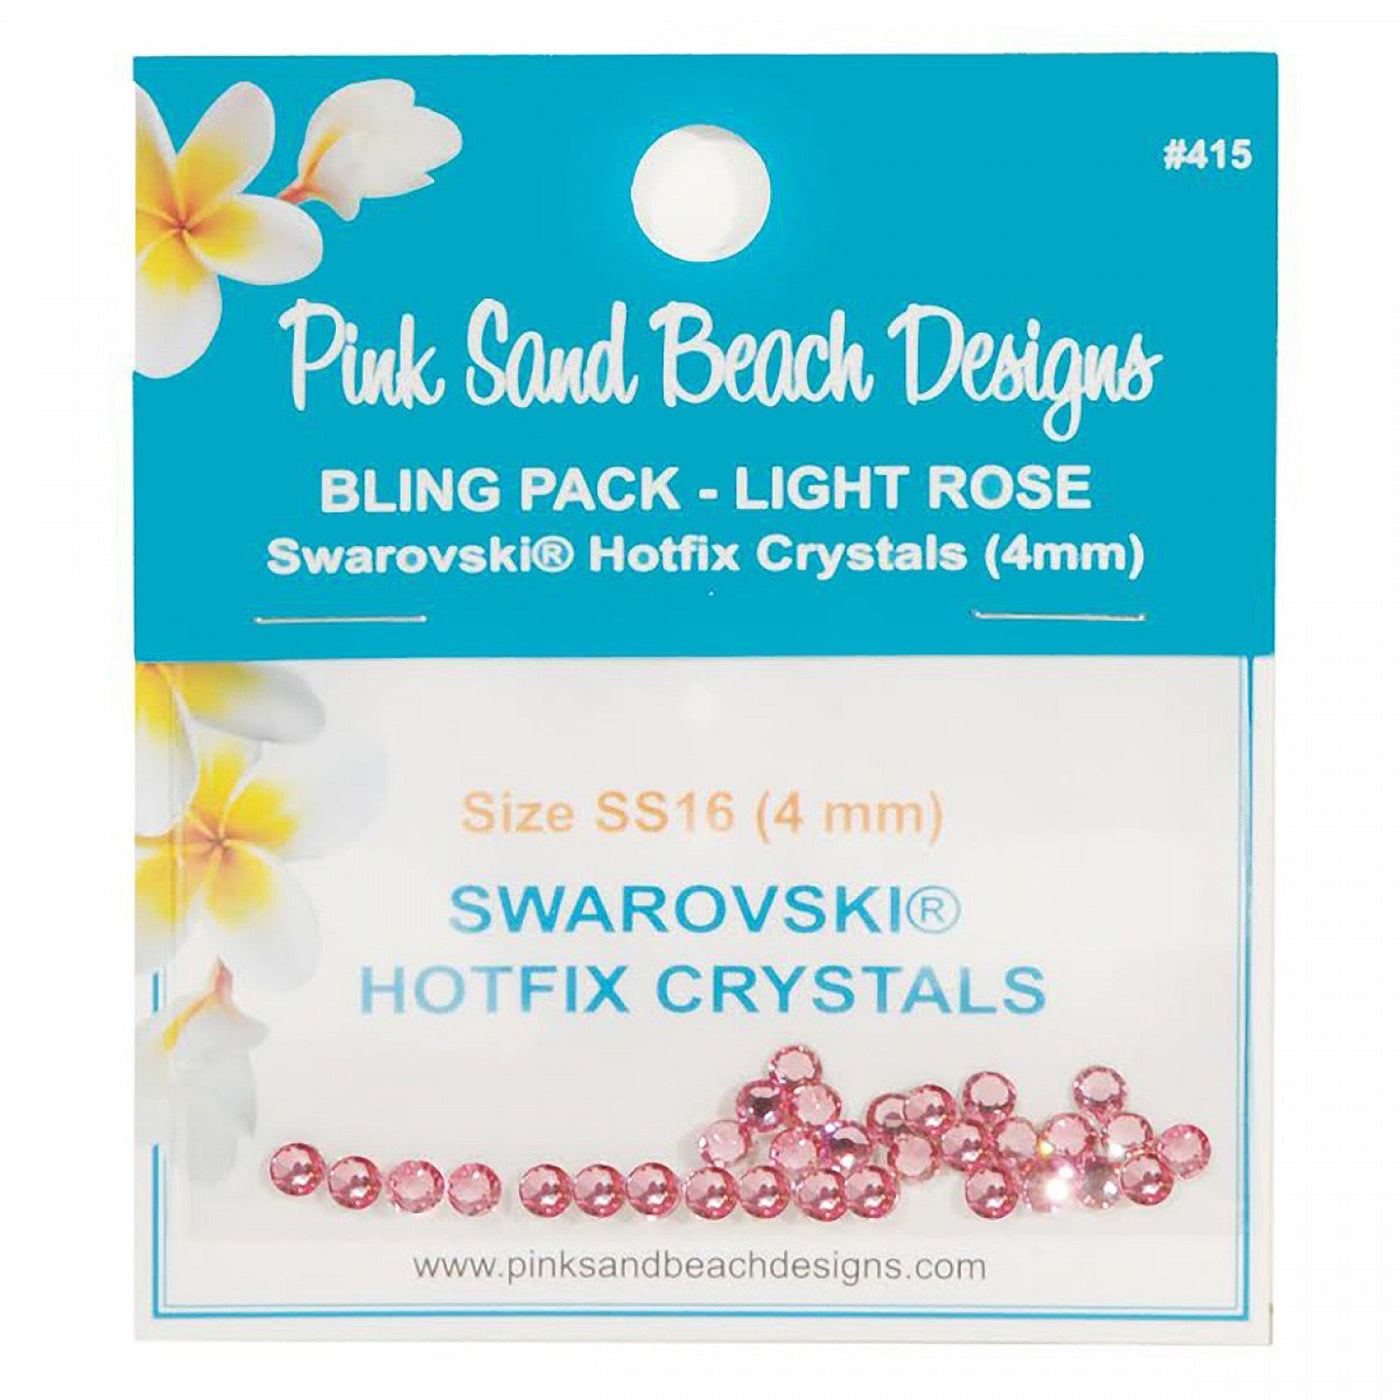 Bling Pack - Swarovski Hotfix Crystal 4mm - Light Rose